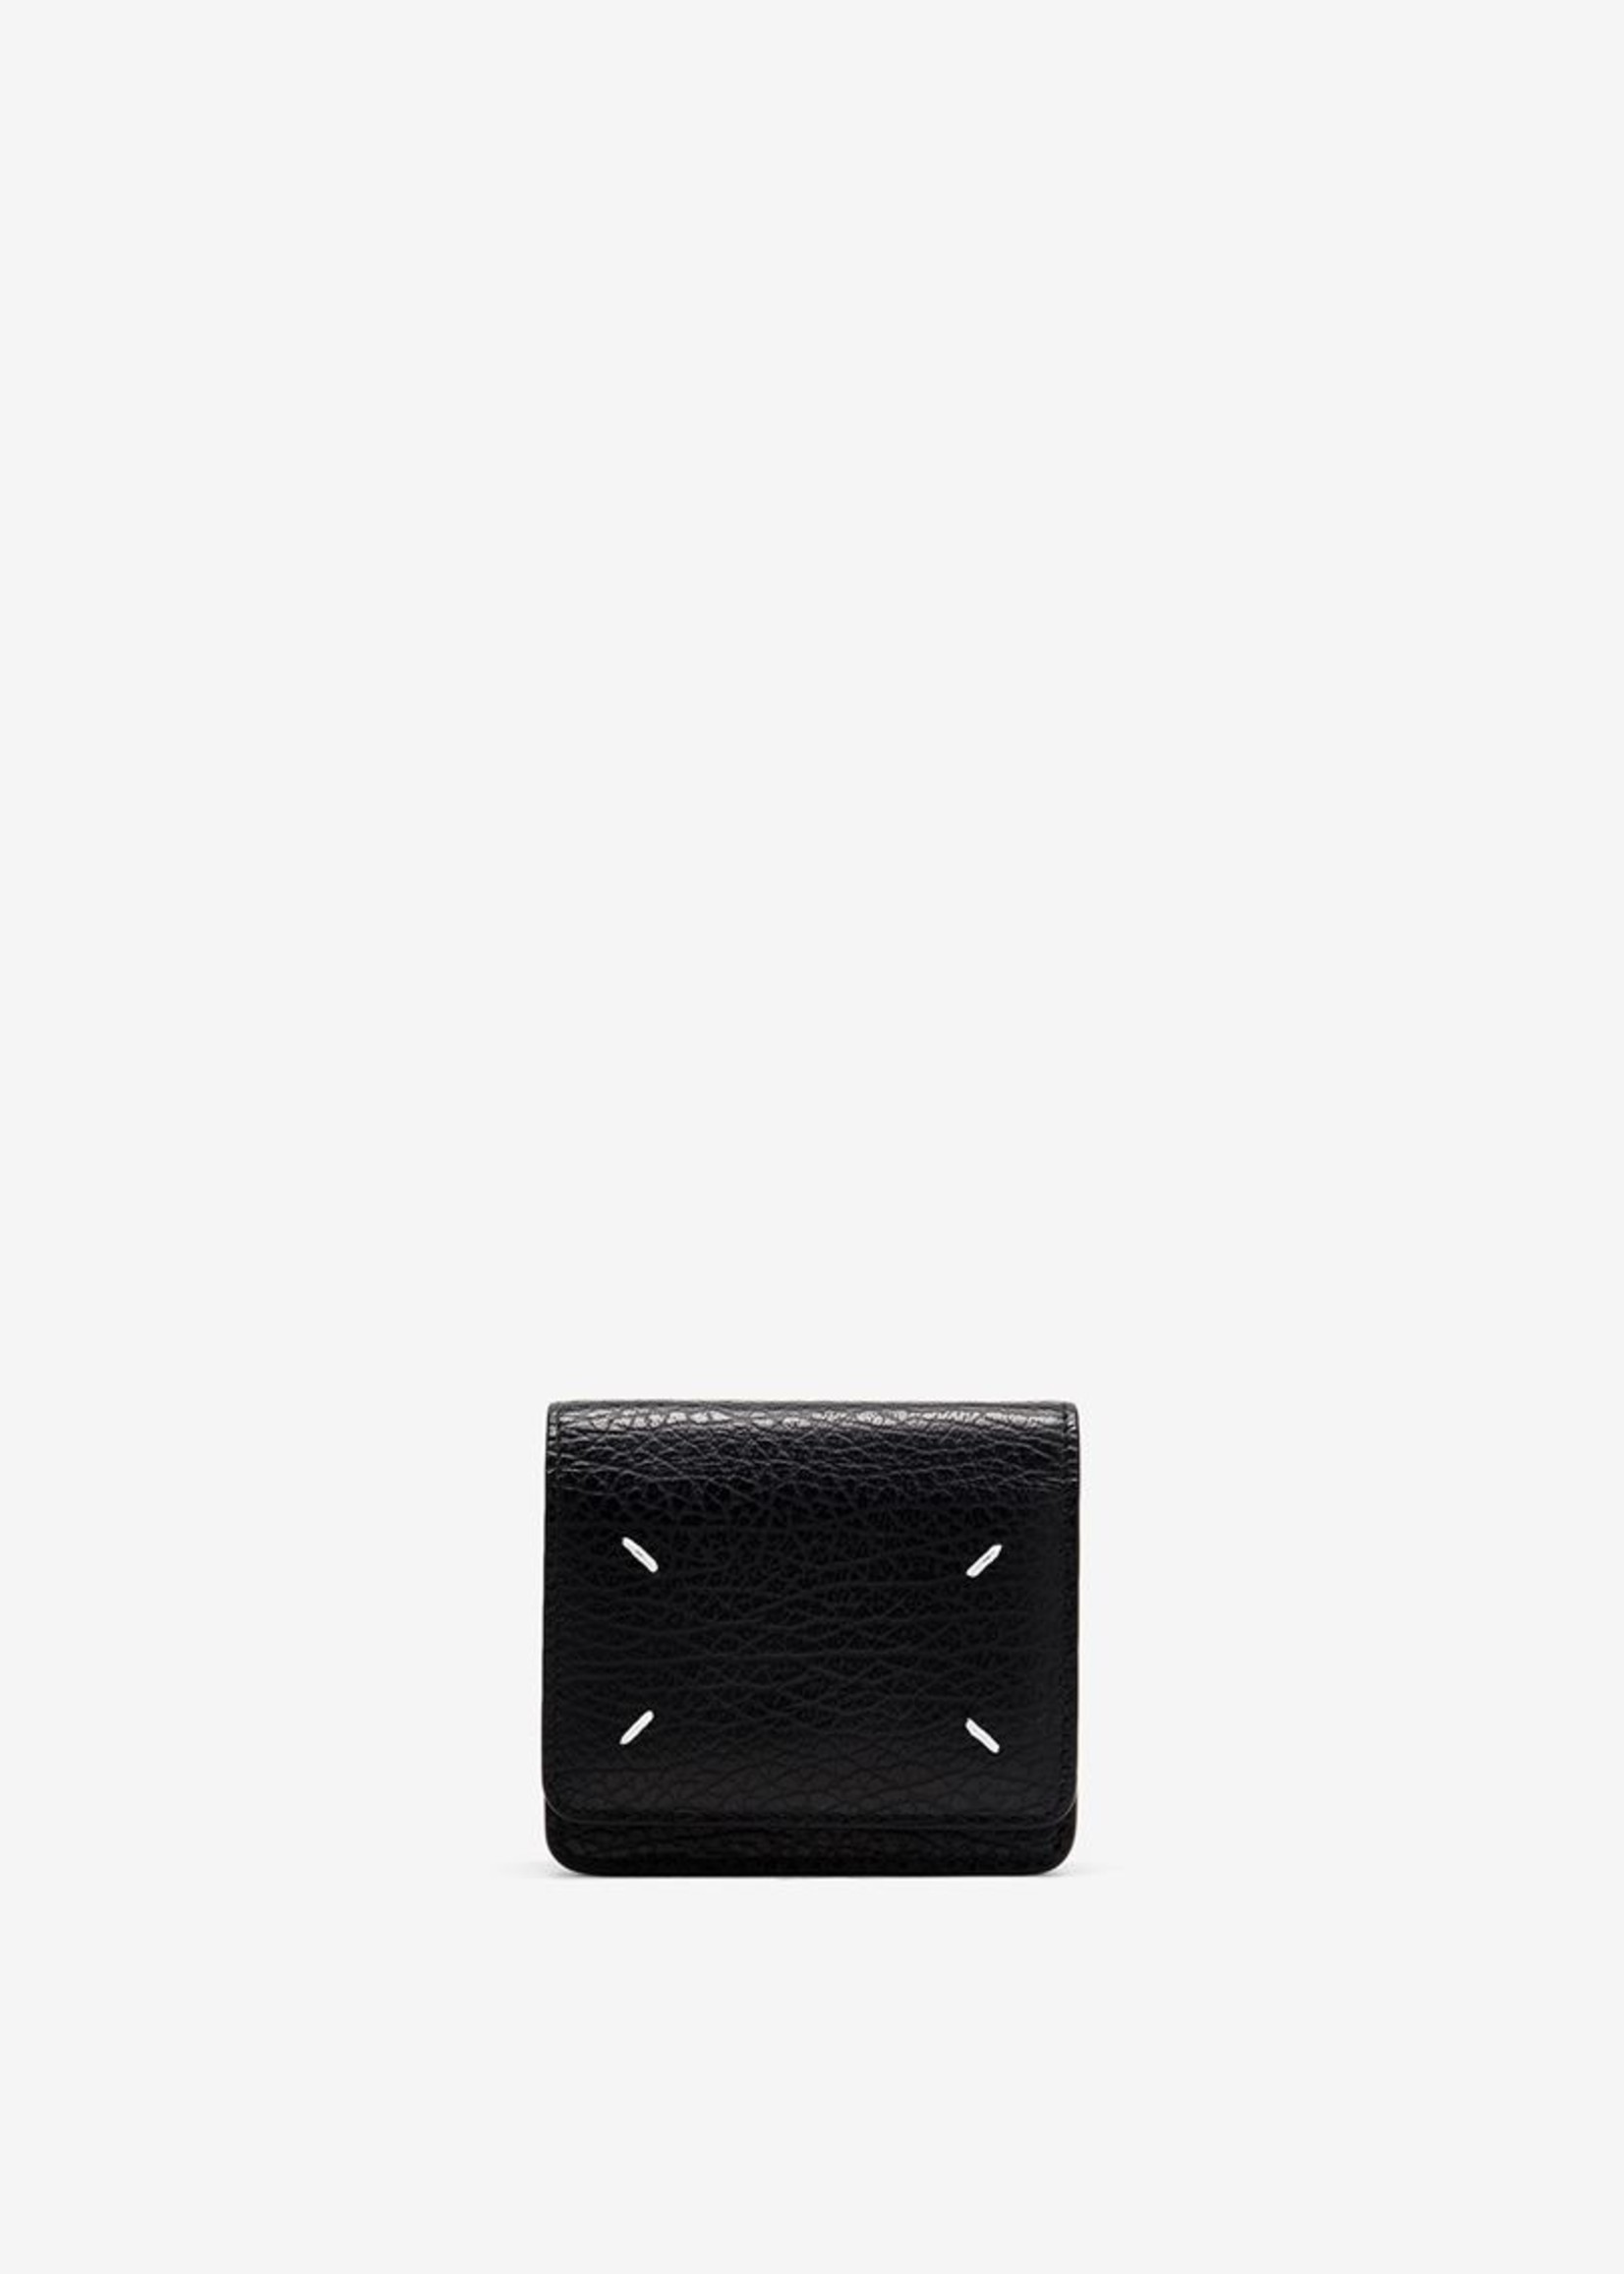 Maison Margiela Small Chain Wallet in Black